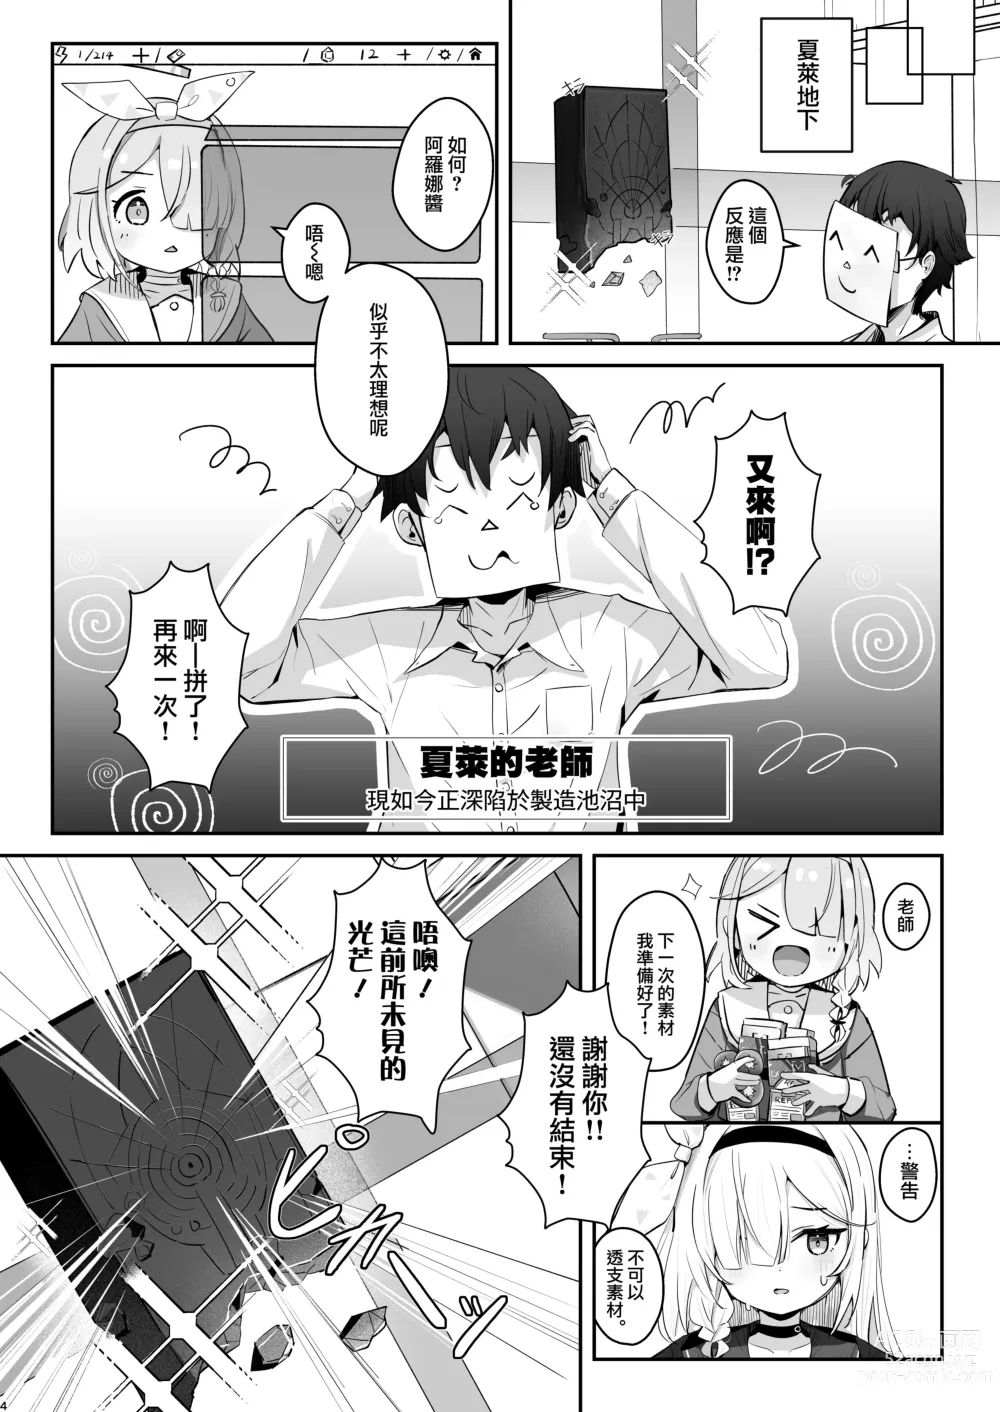 Page 4 of doujinshi 這一份煦暖驀然知曉後。